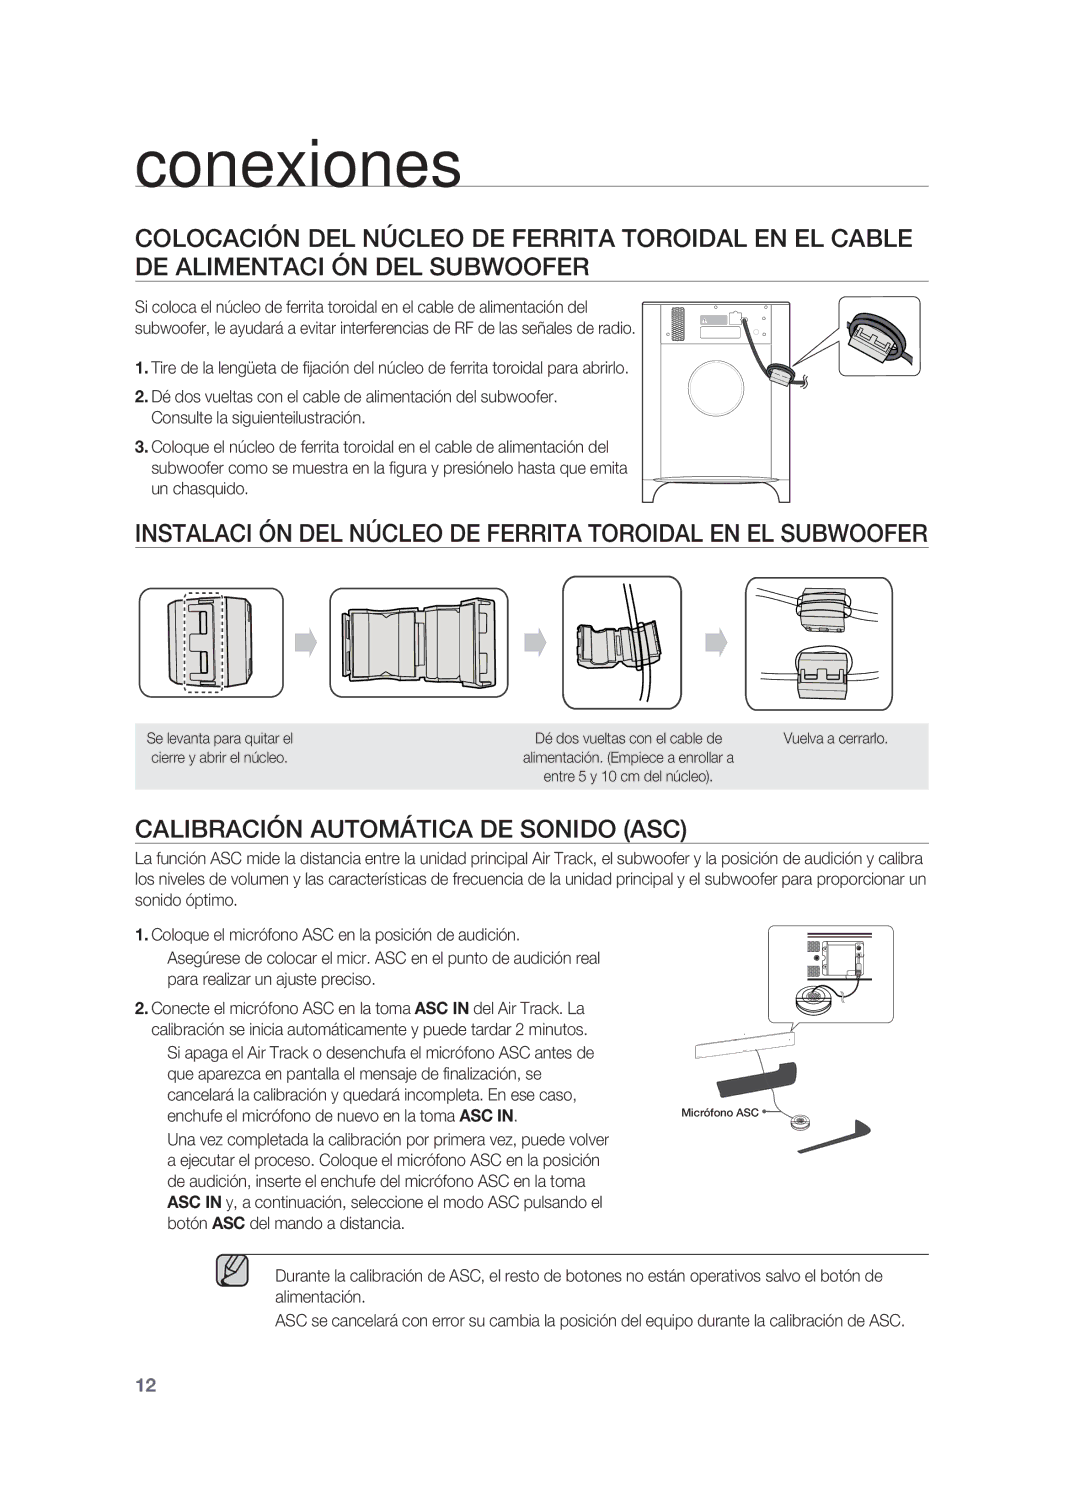 Samsung HW-F850/ZF manual Instalaci ÓN DEL Núcleo DE Ferrita Toroidal EN EL Subwoofer, Calibración Automática DE Sonido ASC 